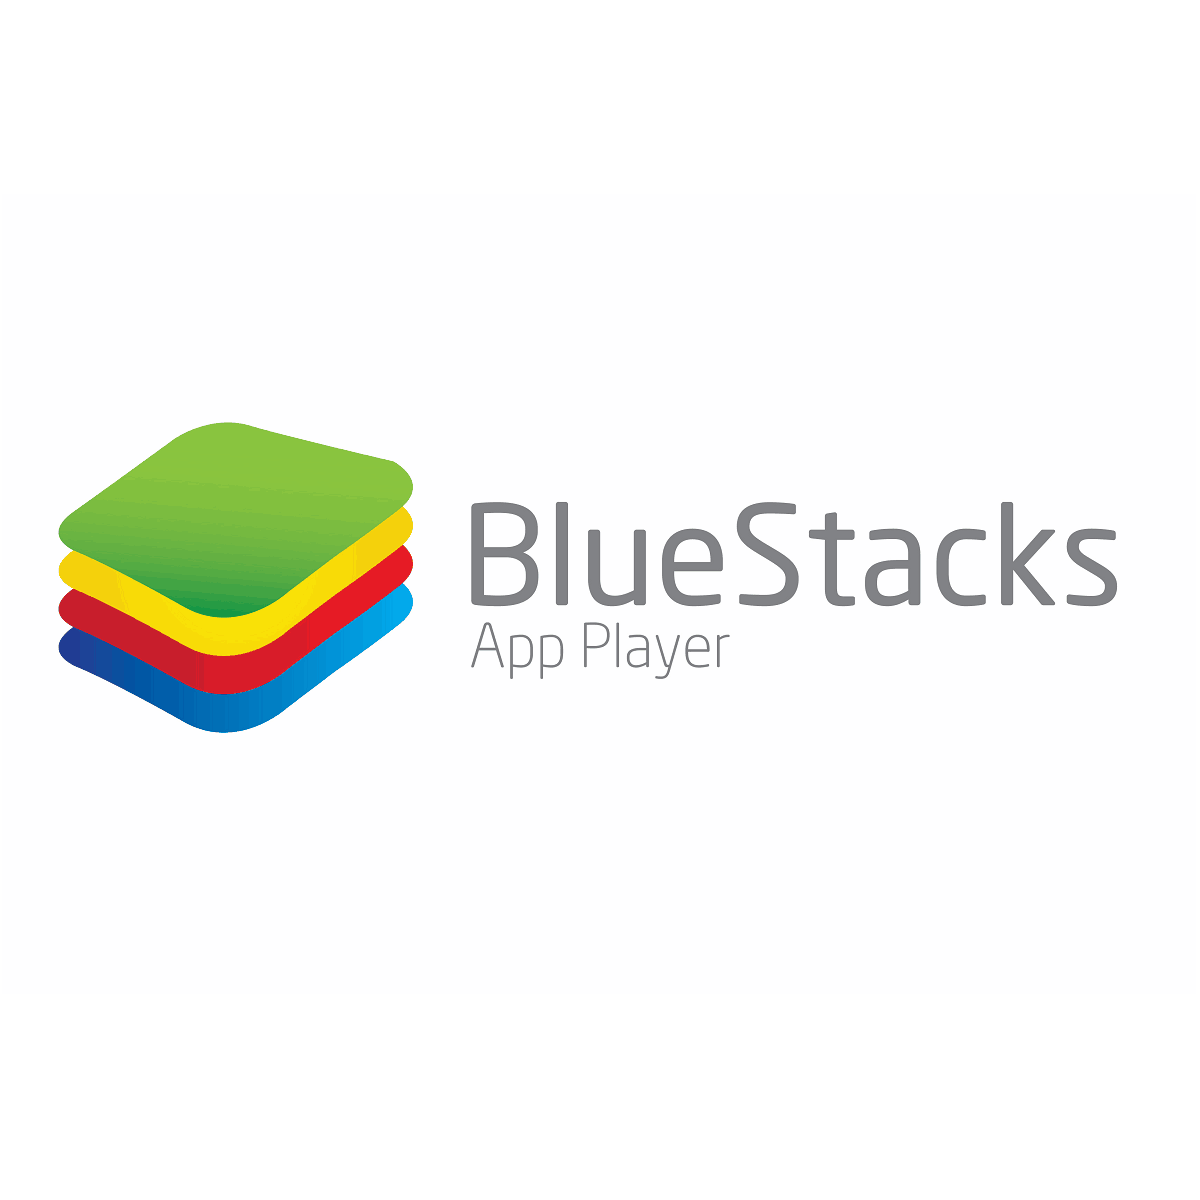 bluestacks update problem